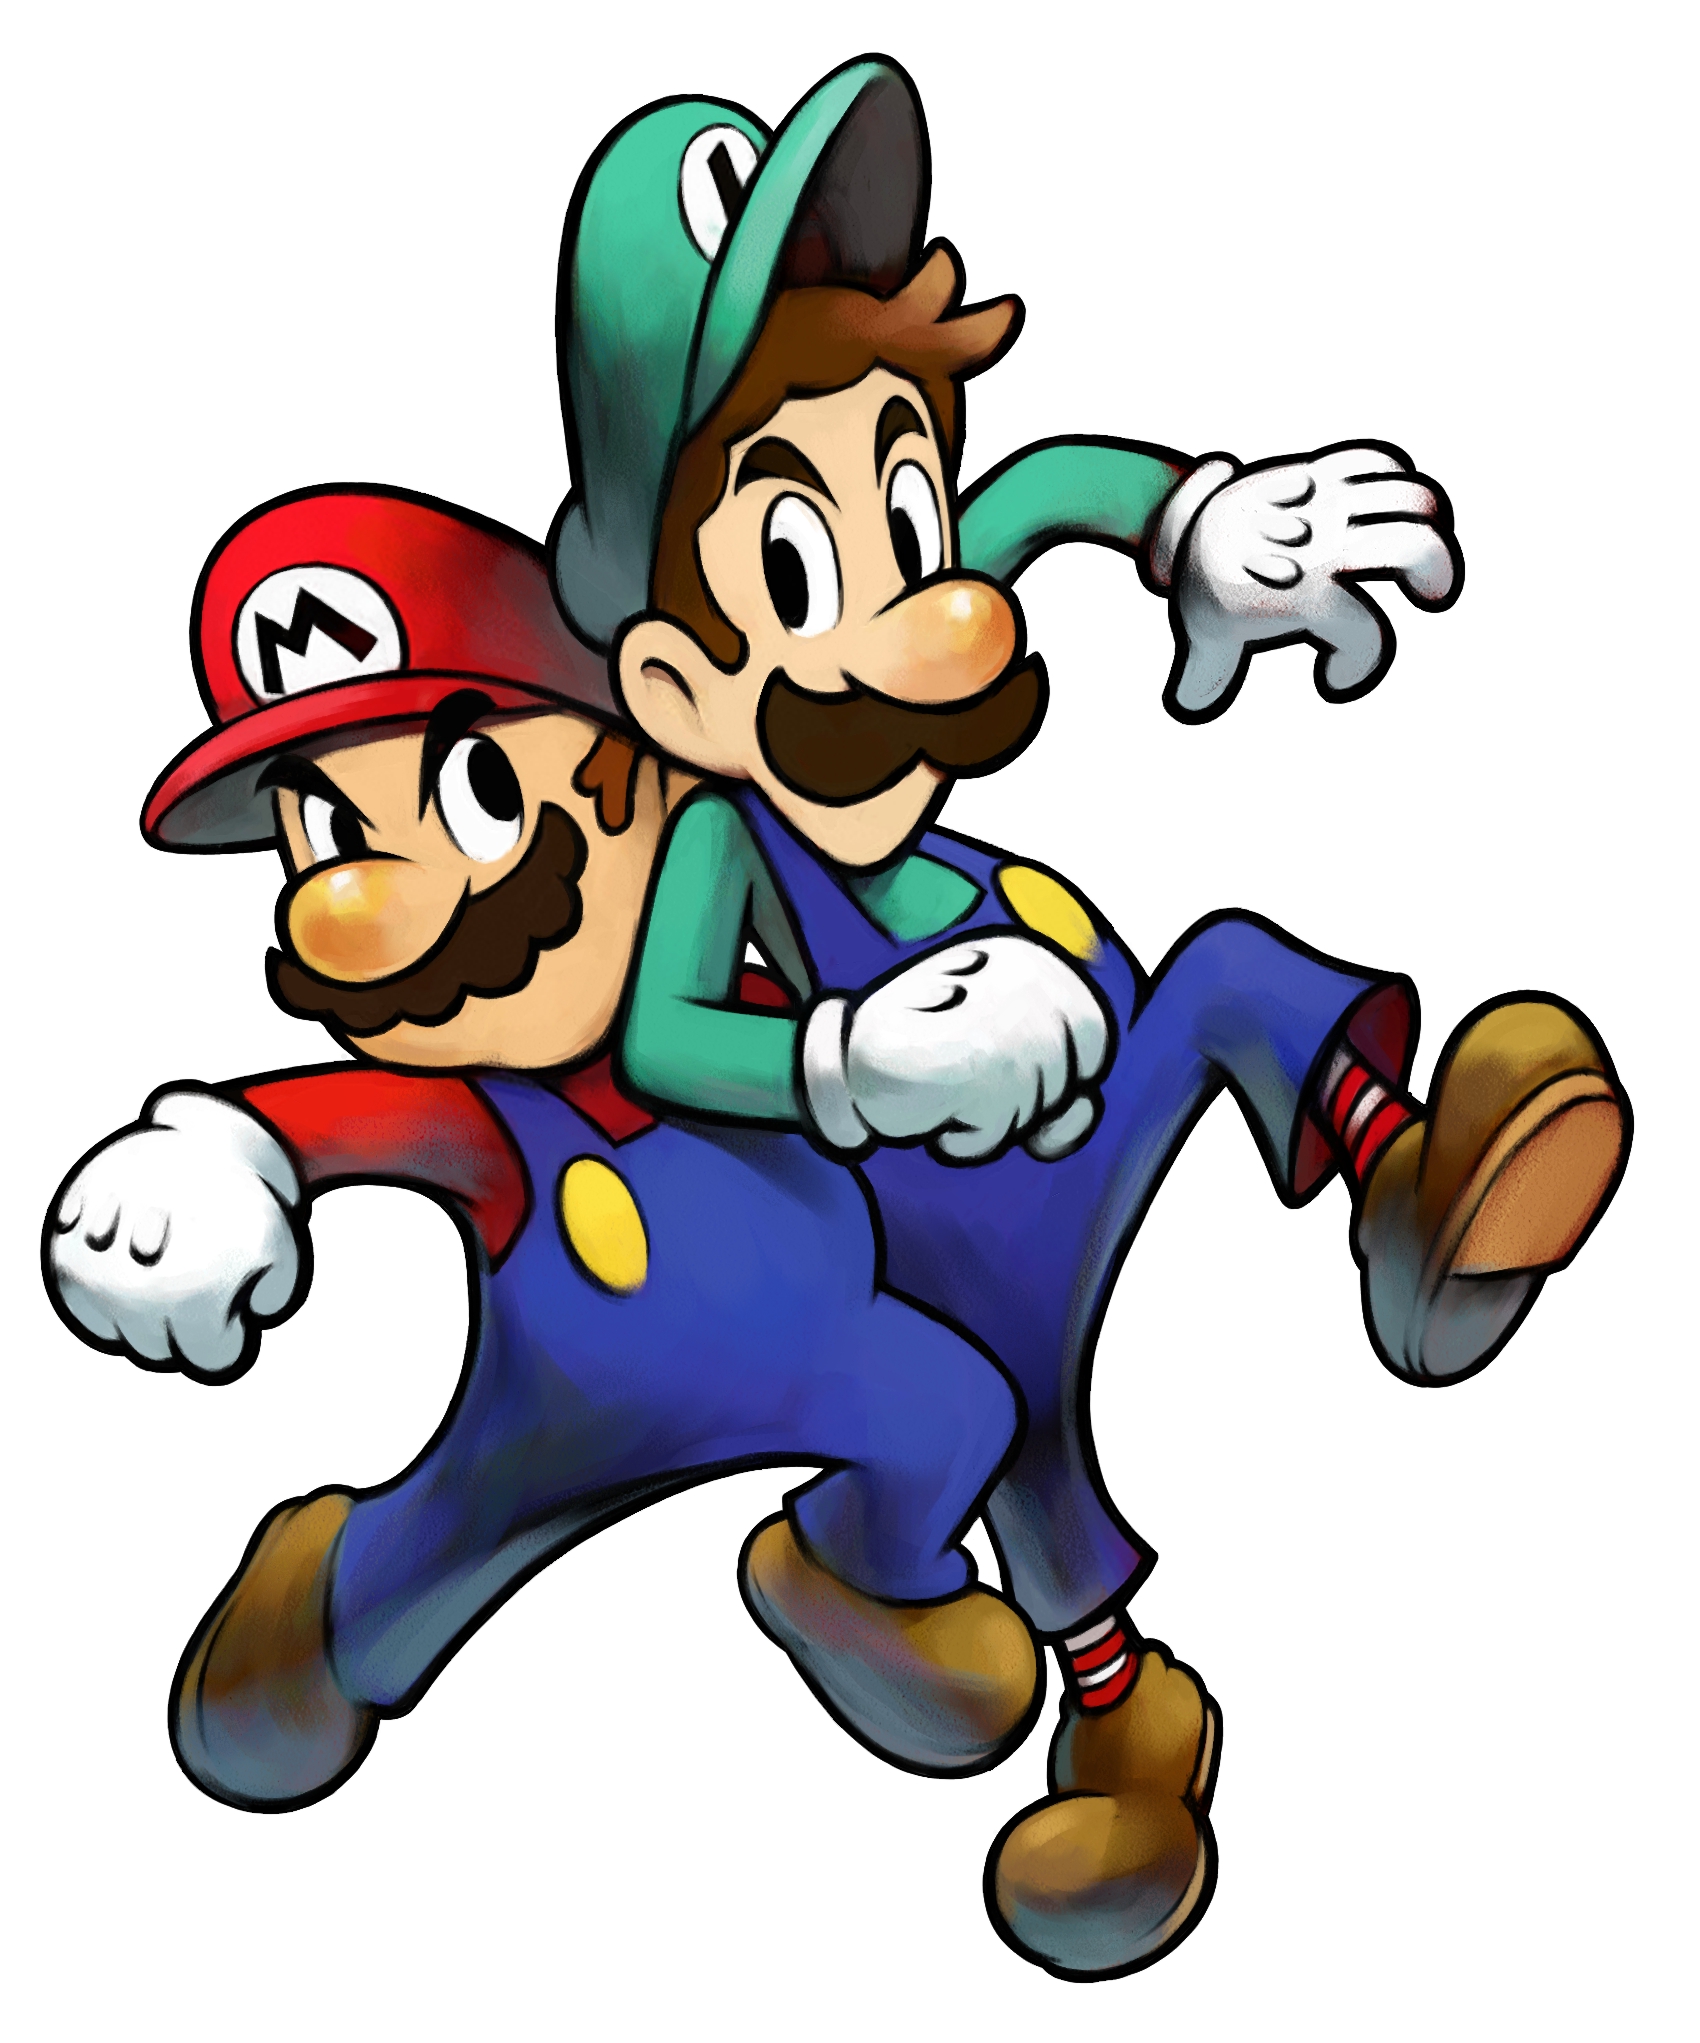 M&L_Mario_&_Luigi.jpg